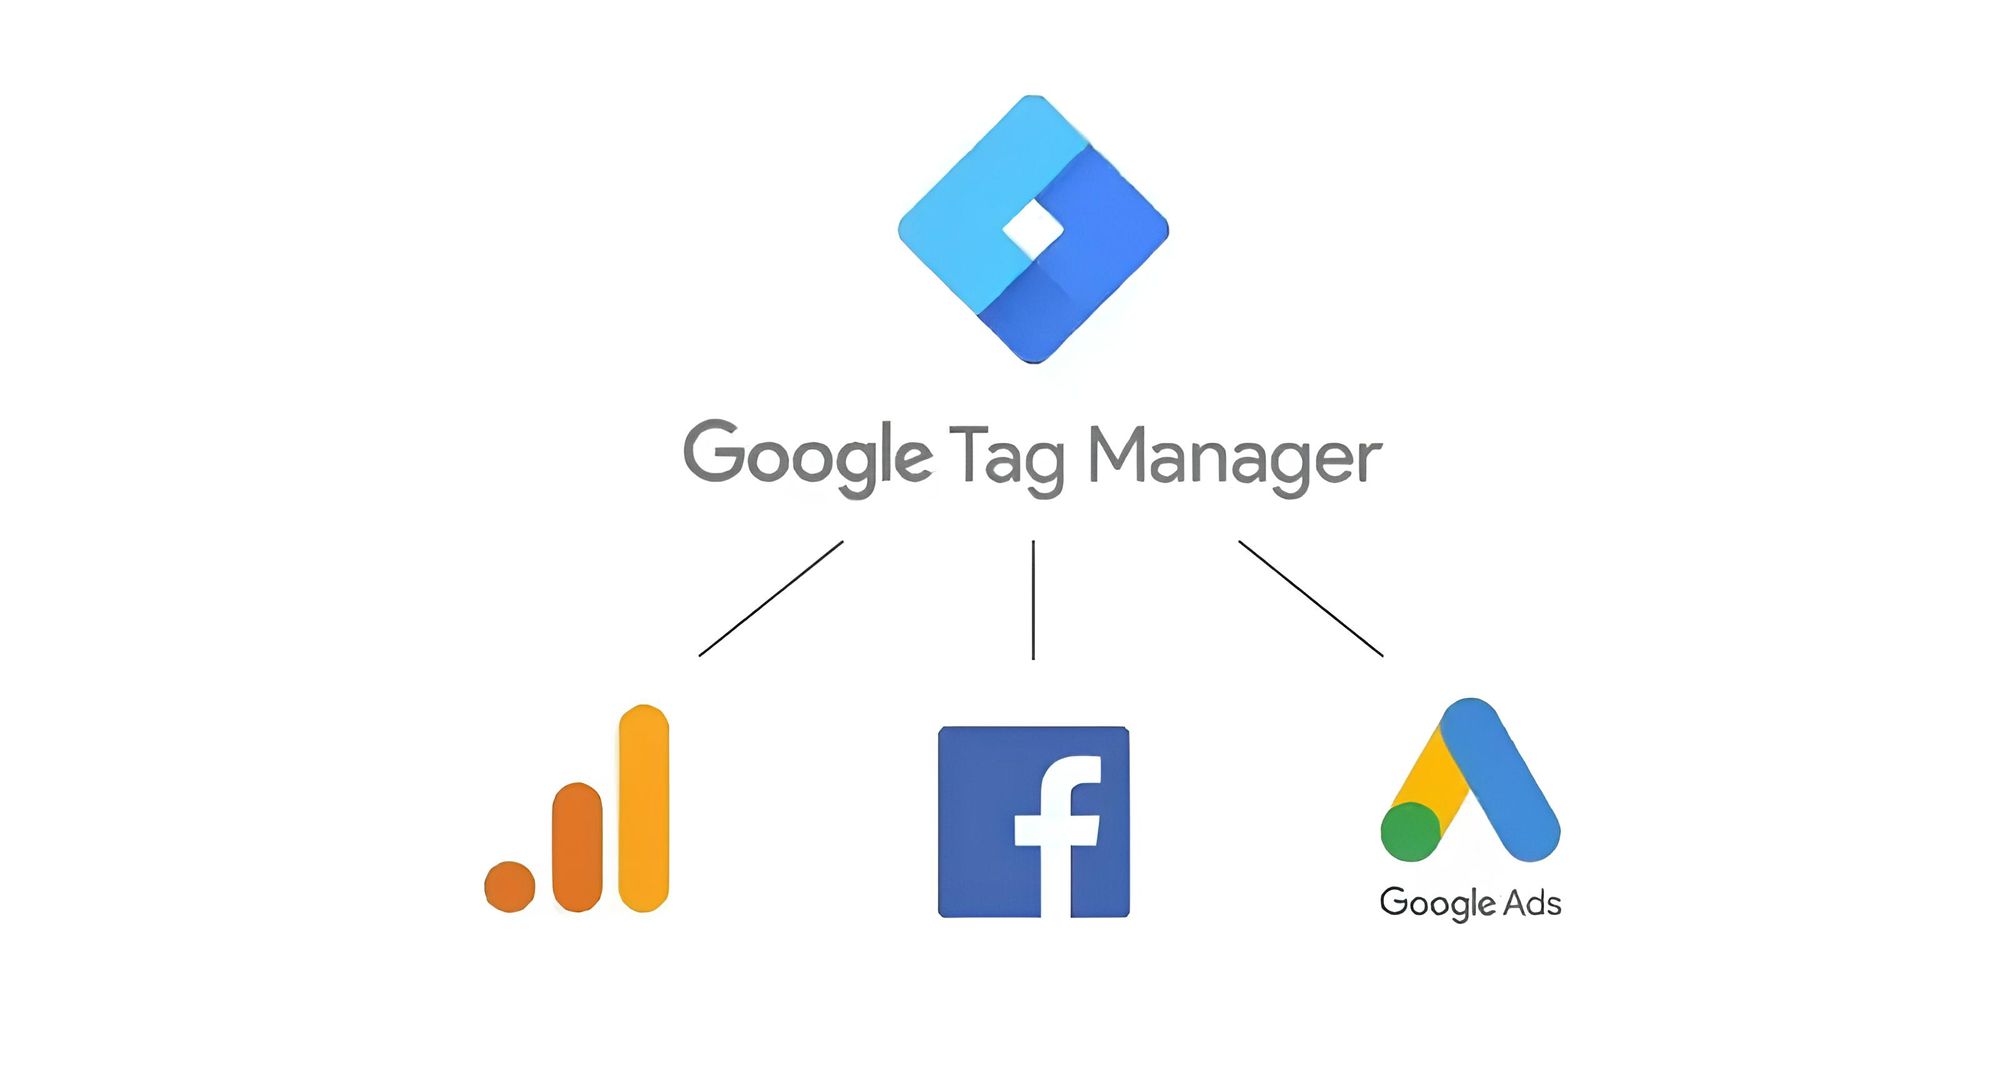 Тег google. Менеджер гугл. Google менеджер тегов. Google tag Manager logo. Google tag Manager лого PNG.